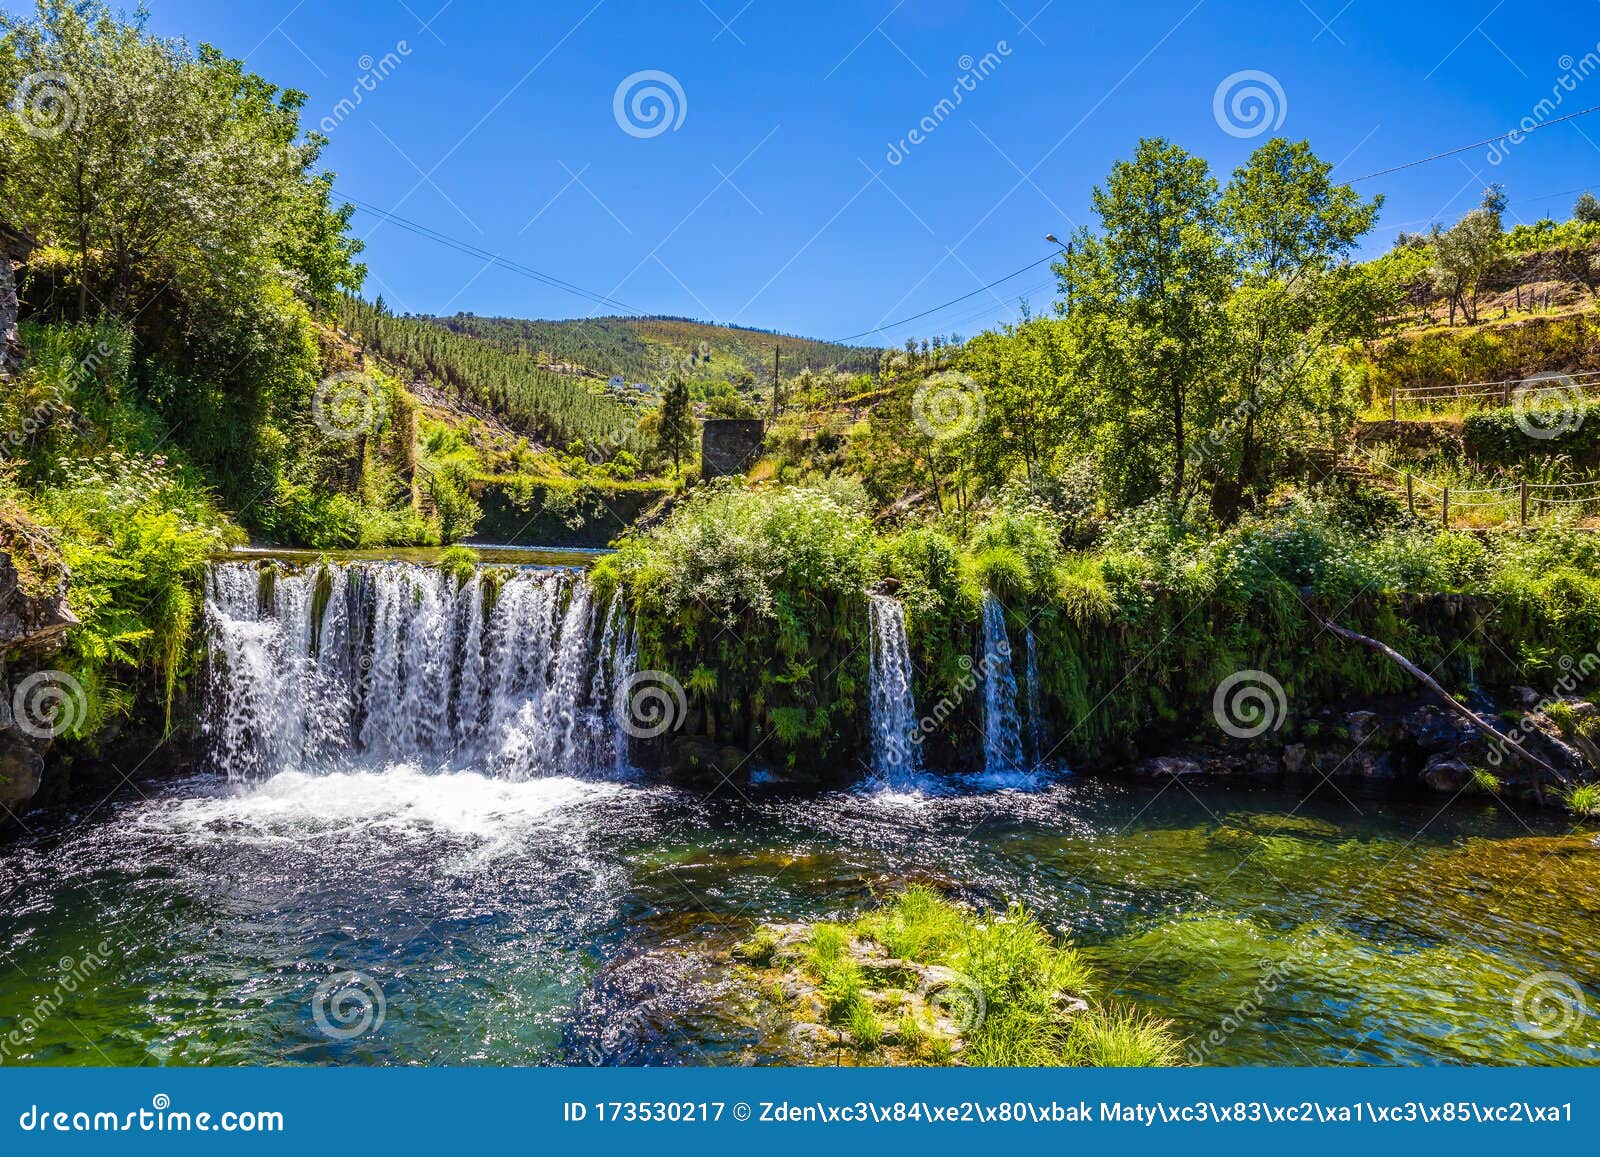 poco da broca waterfall - sierra estrella,portugal